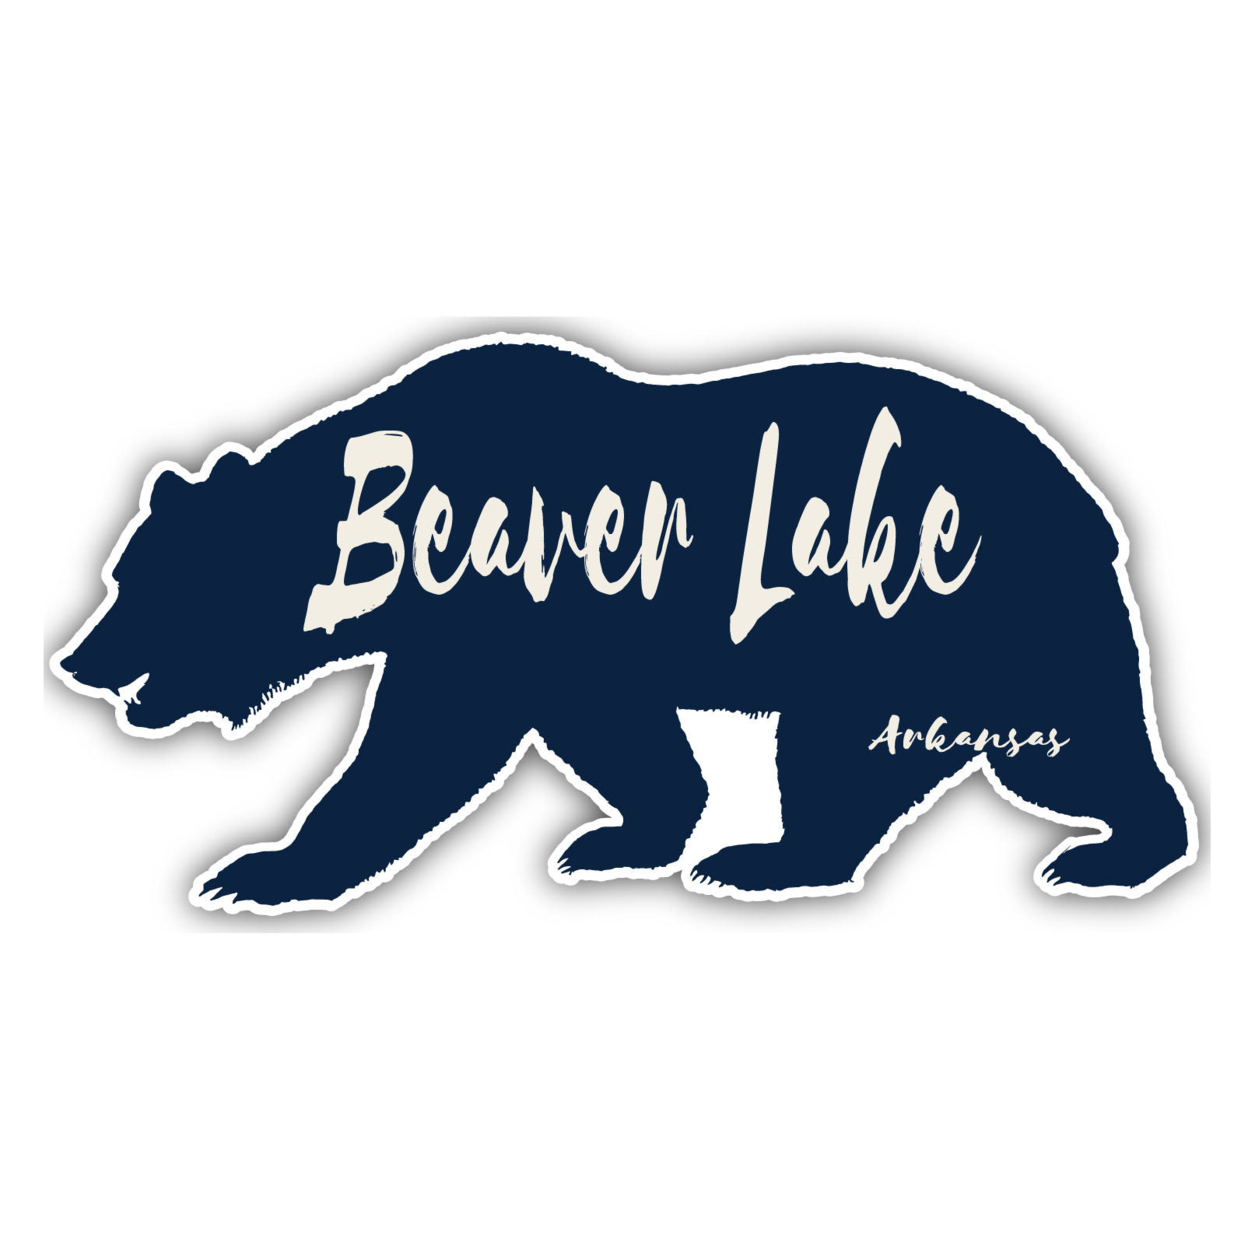 Beaver Lake Arkansas Souvenir Decorative Stickers (Choose Theme And Size) - Single Unit, 6-Inch, Tent